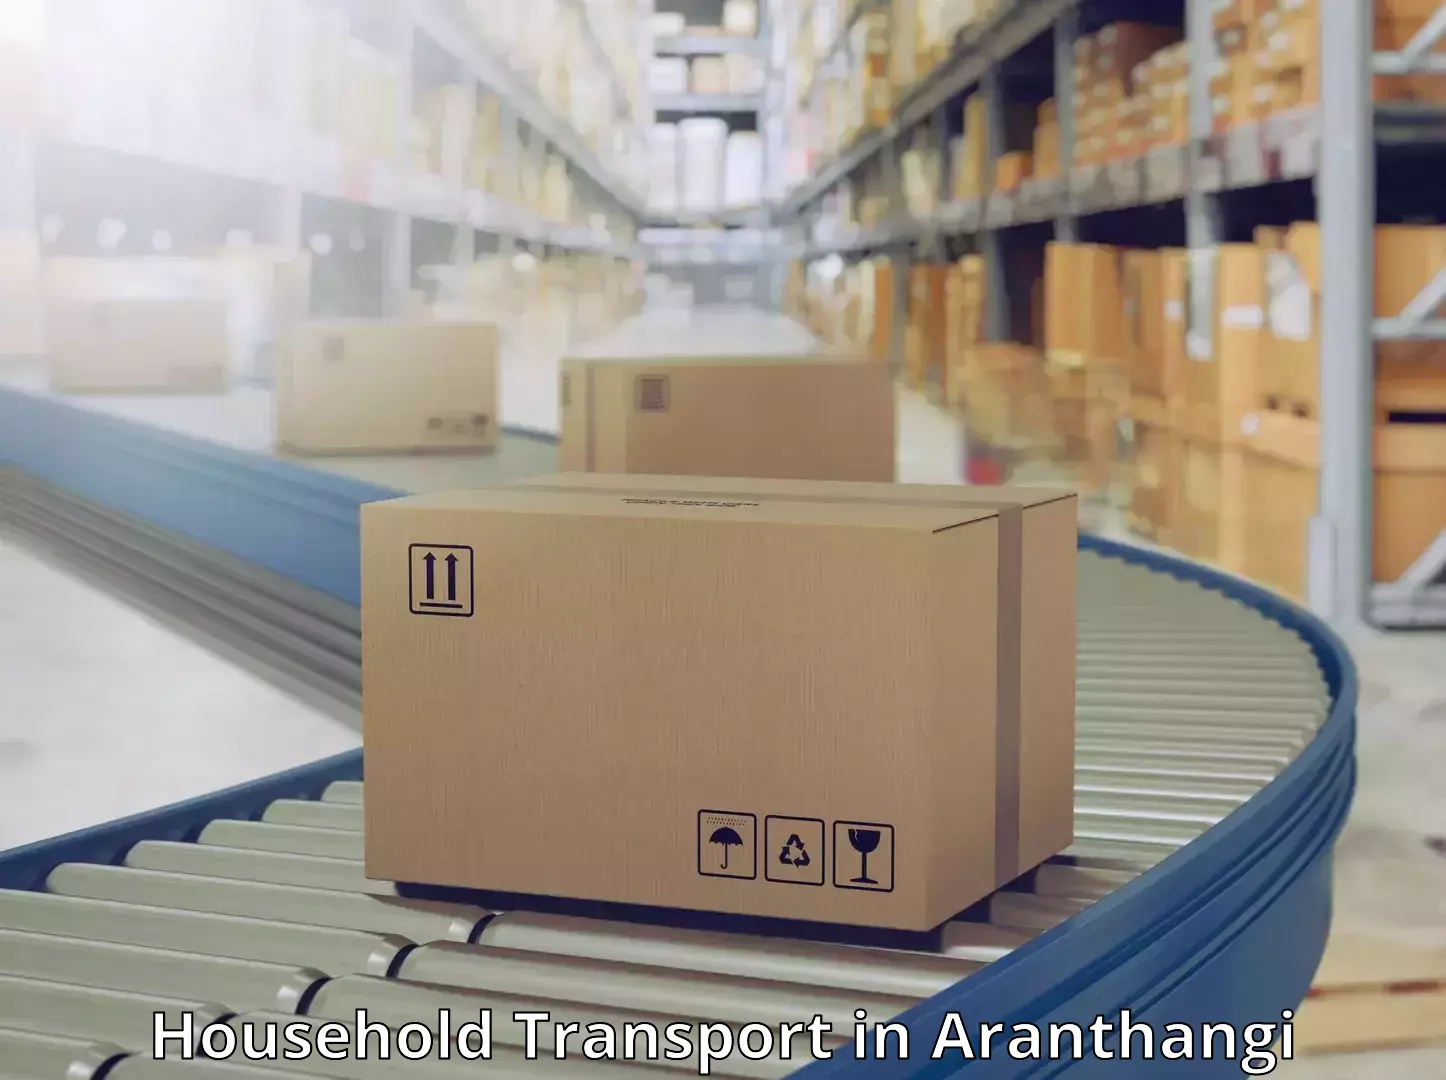 Household goods transport service in Aranthangi